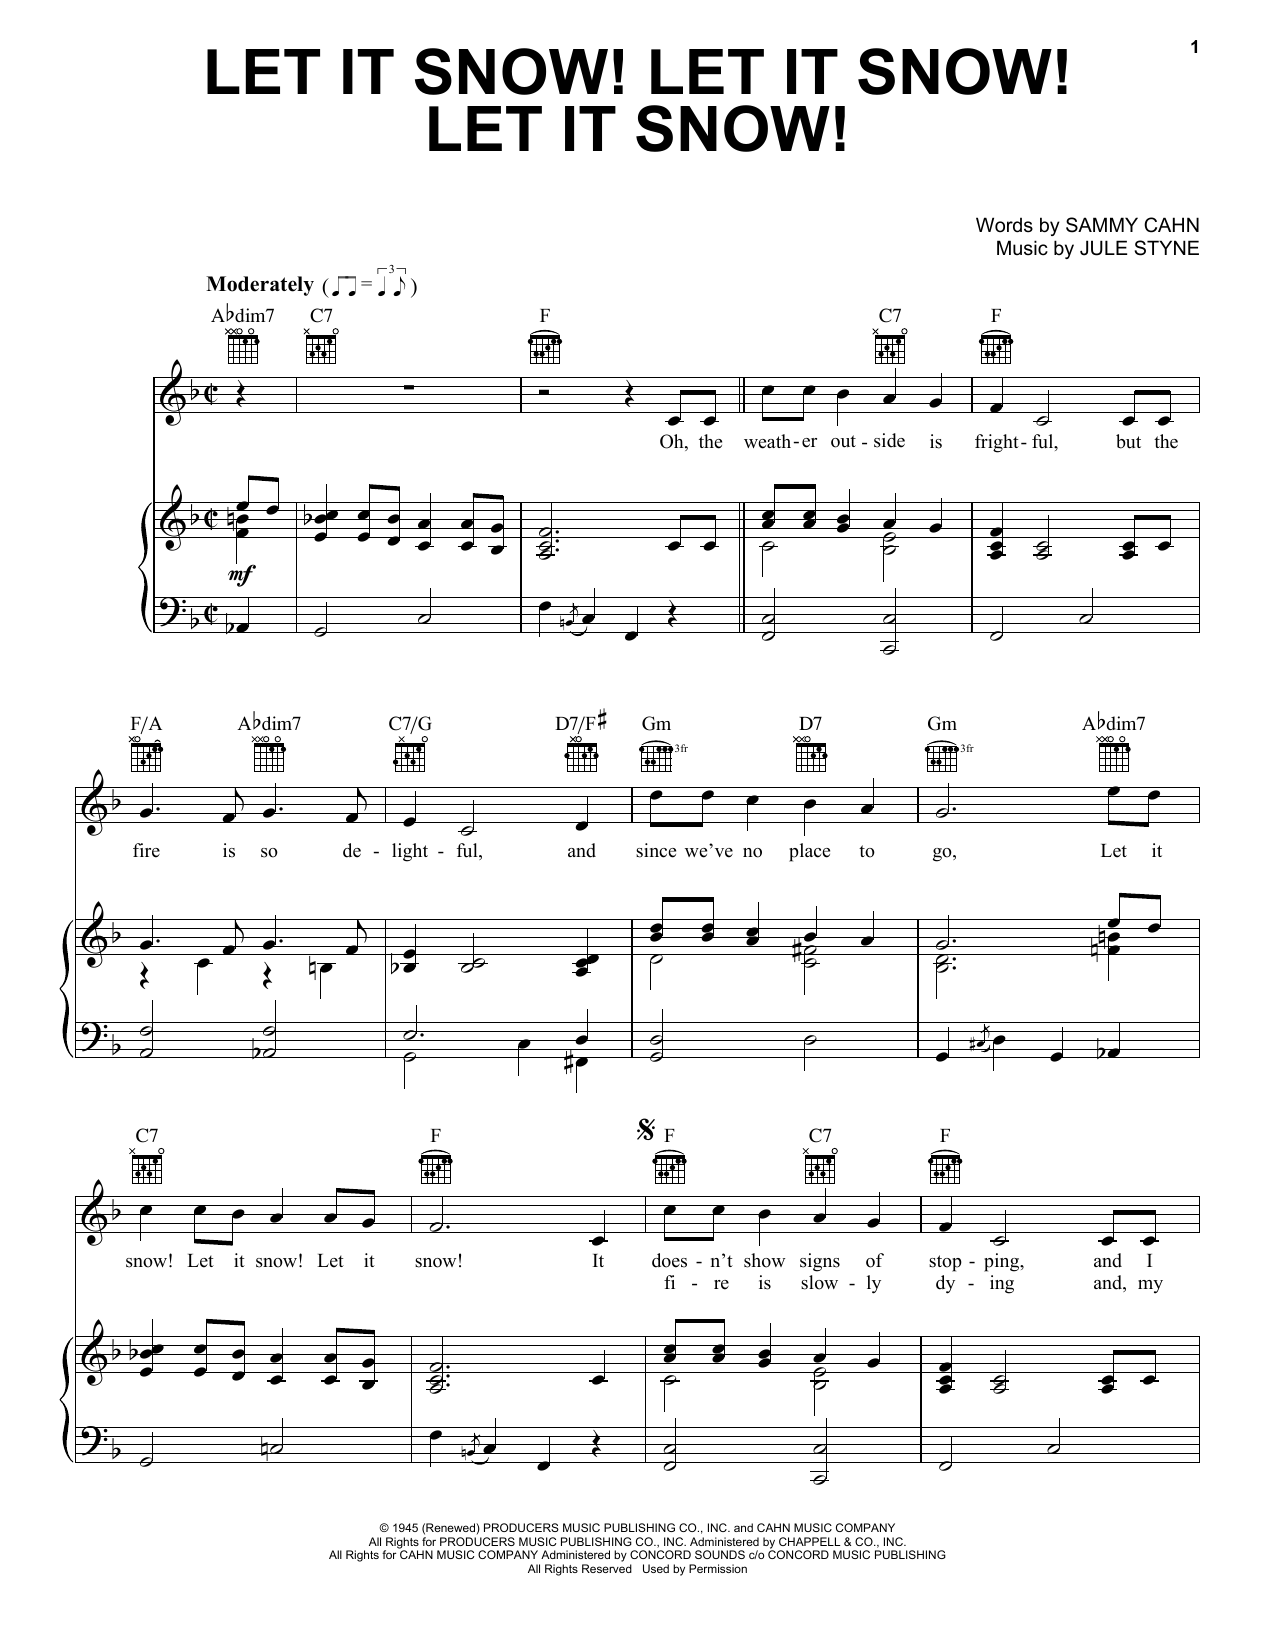 Sammy Cahn Let It Snow! Let It Snow! Let It Snow! Sheet Music Notes & Chords for Ukulele - Download or Print PDF